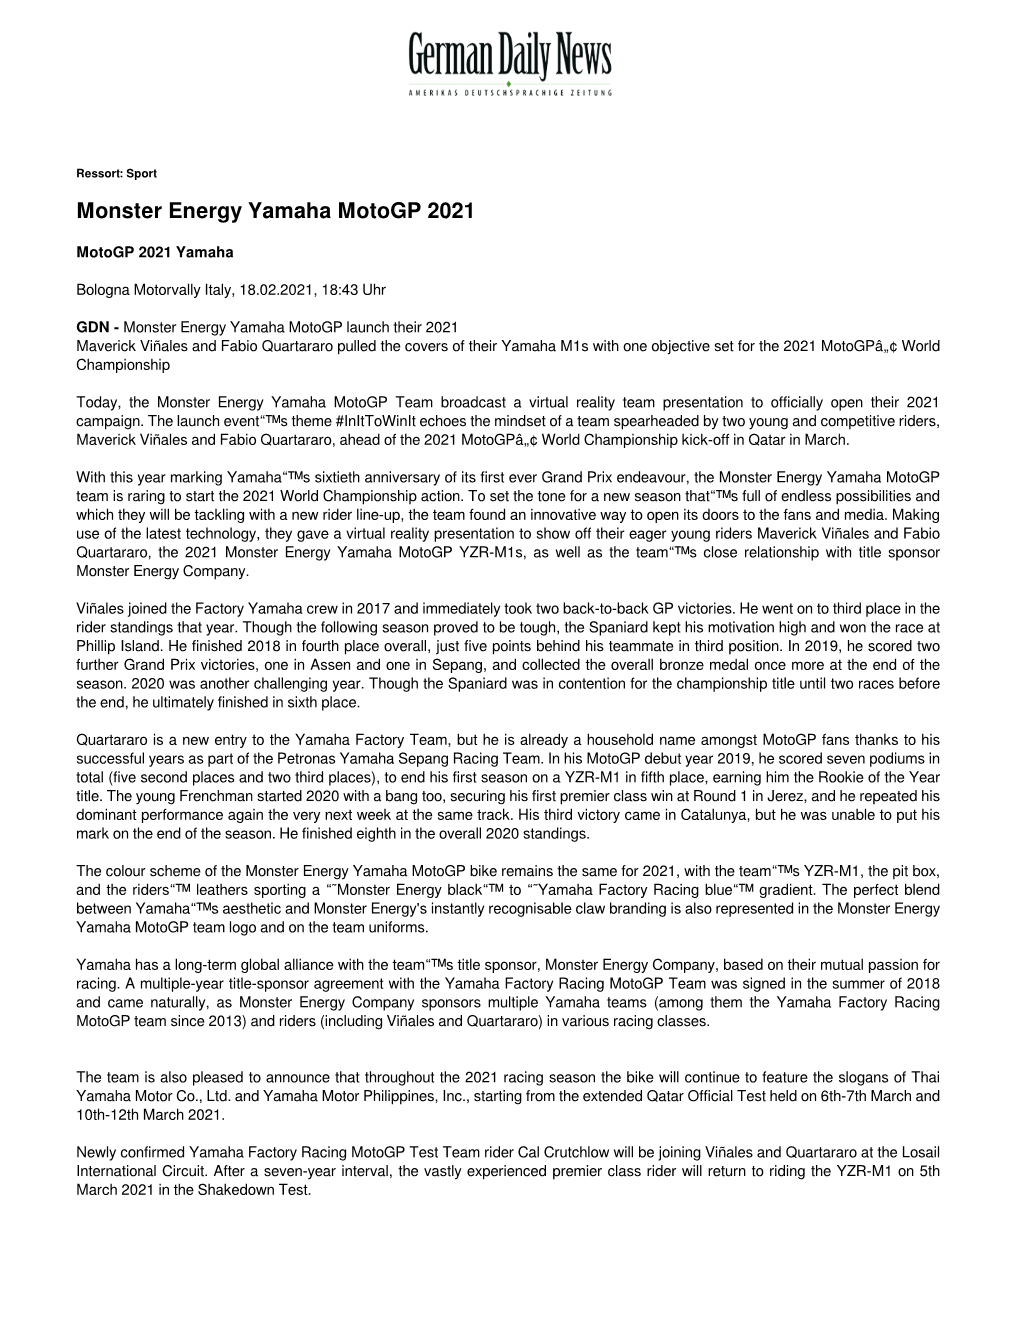 Monster Energy Yamaha Motogp 2021